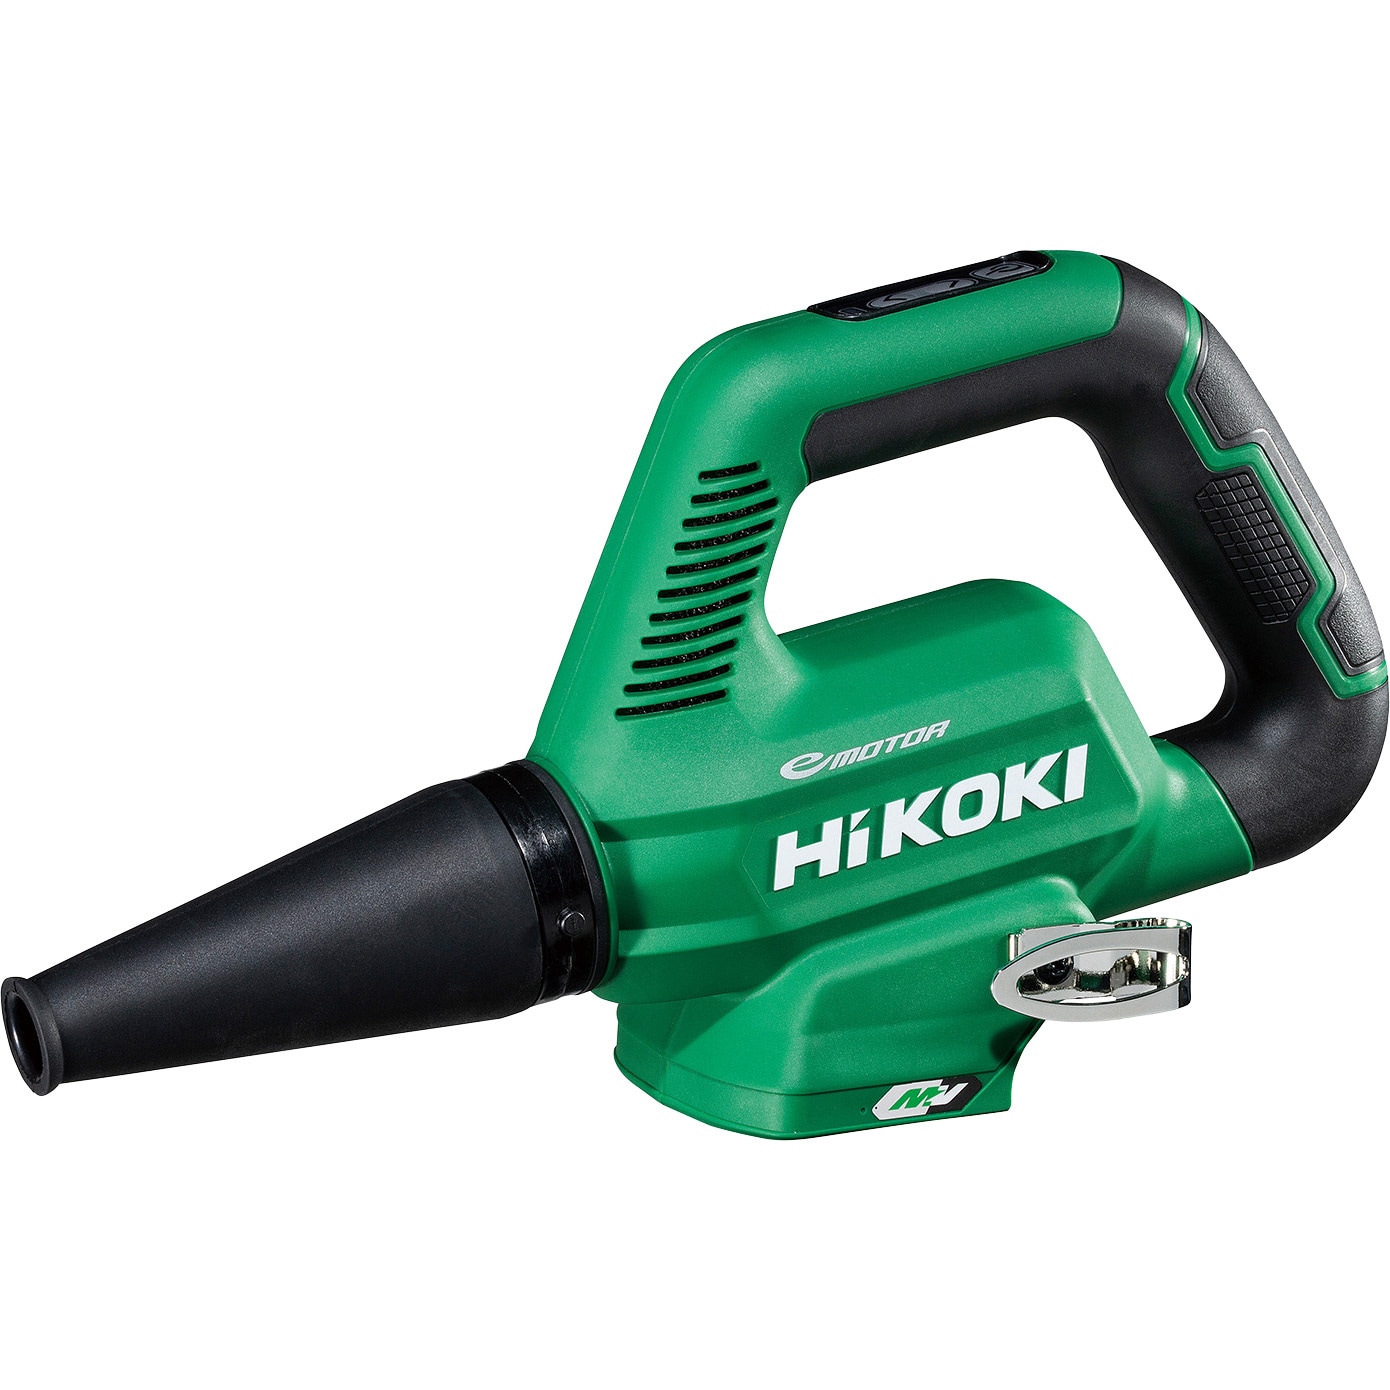 HiKOKI(ハイコーキ) ブロア FRB40SA - 電動工具